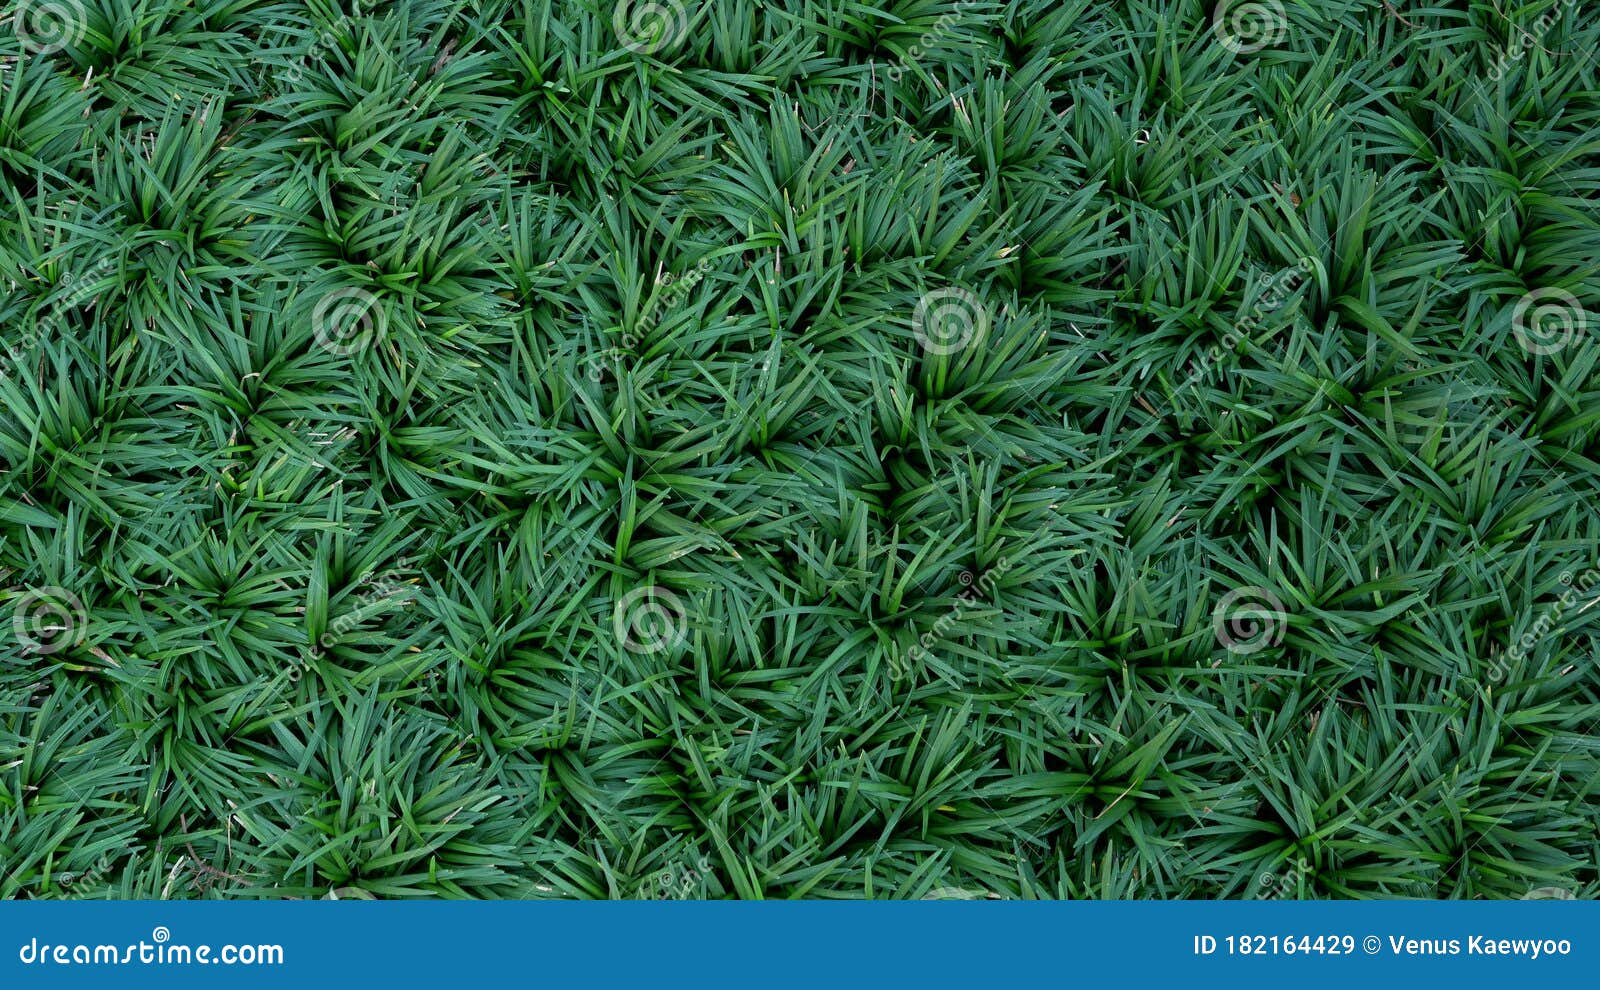 green leaves plant mondo grass ophiopogon japonicus garden background